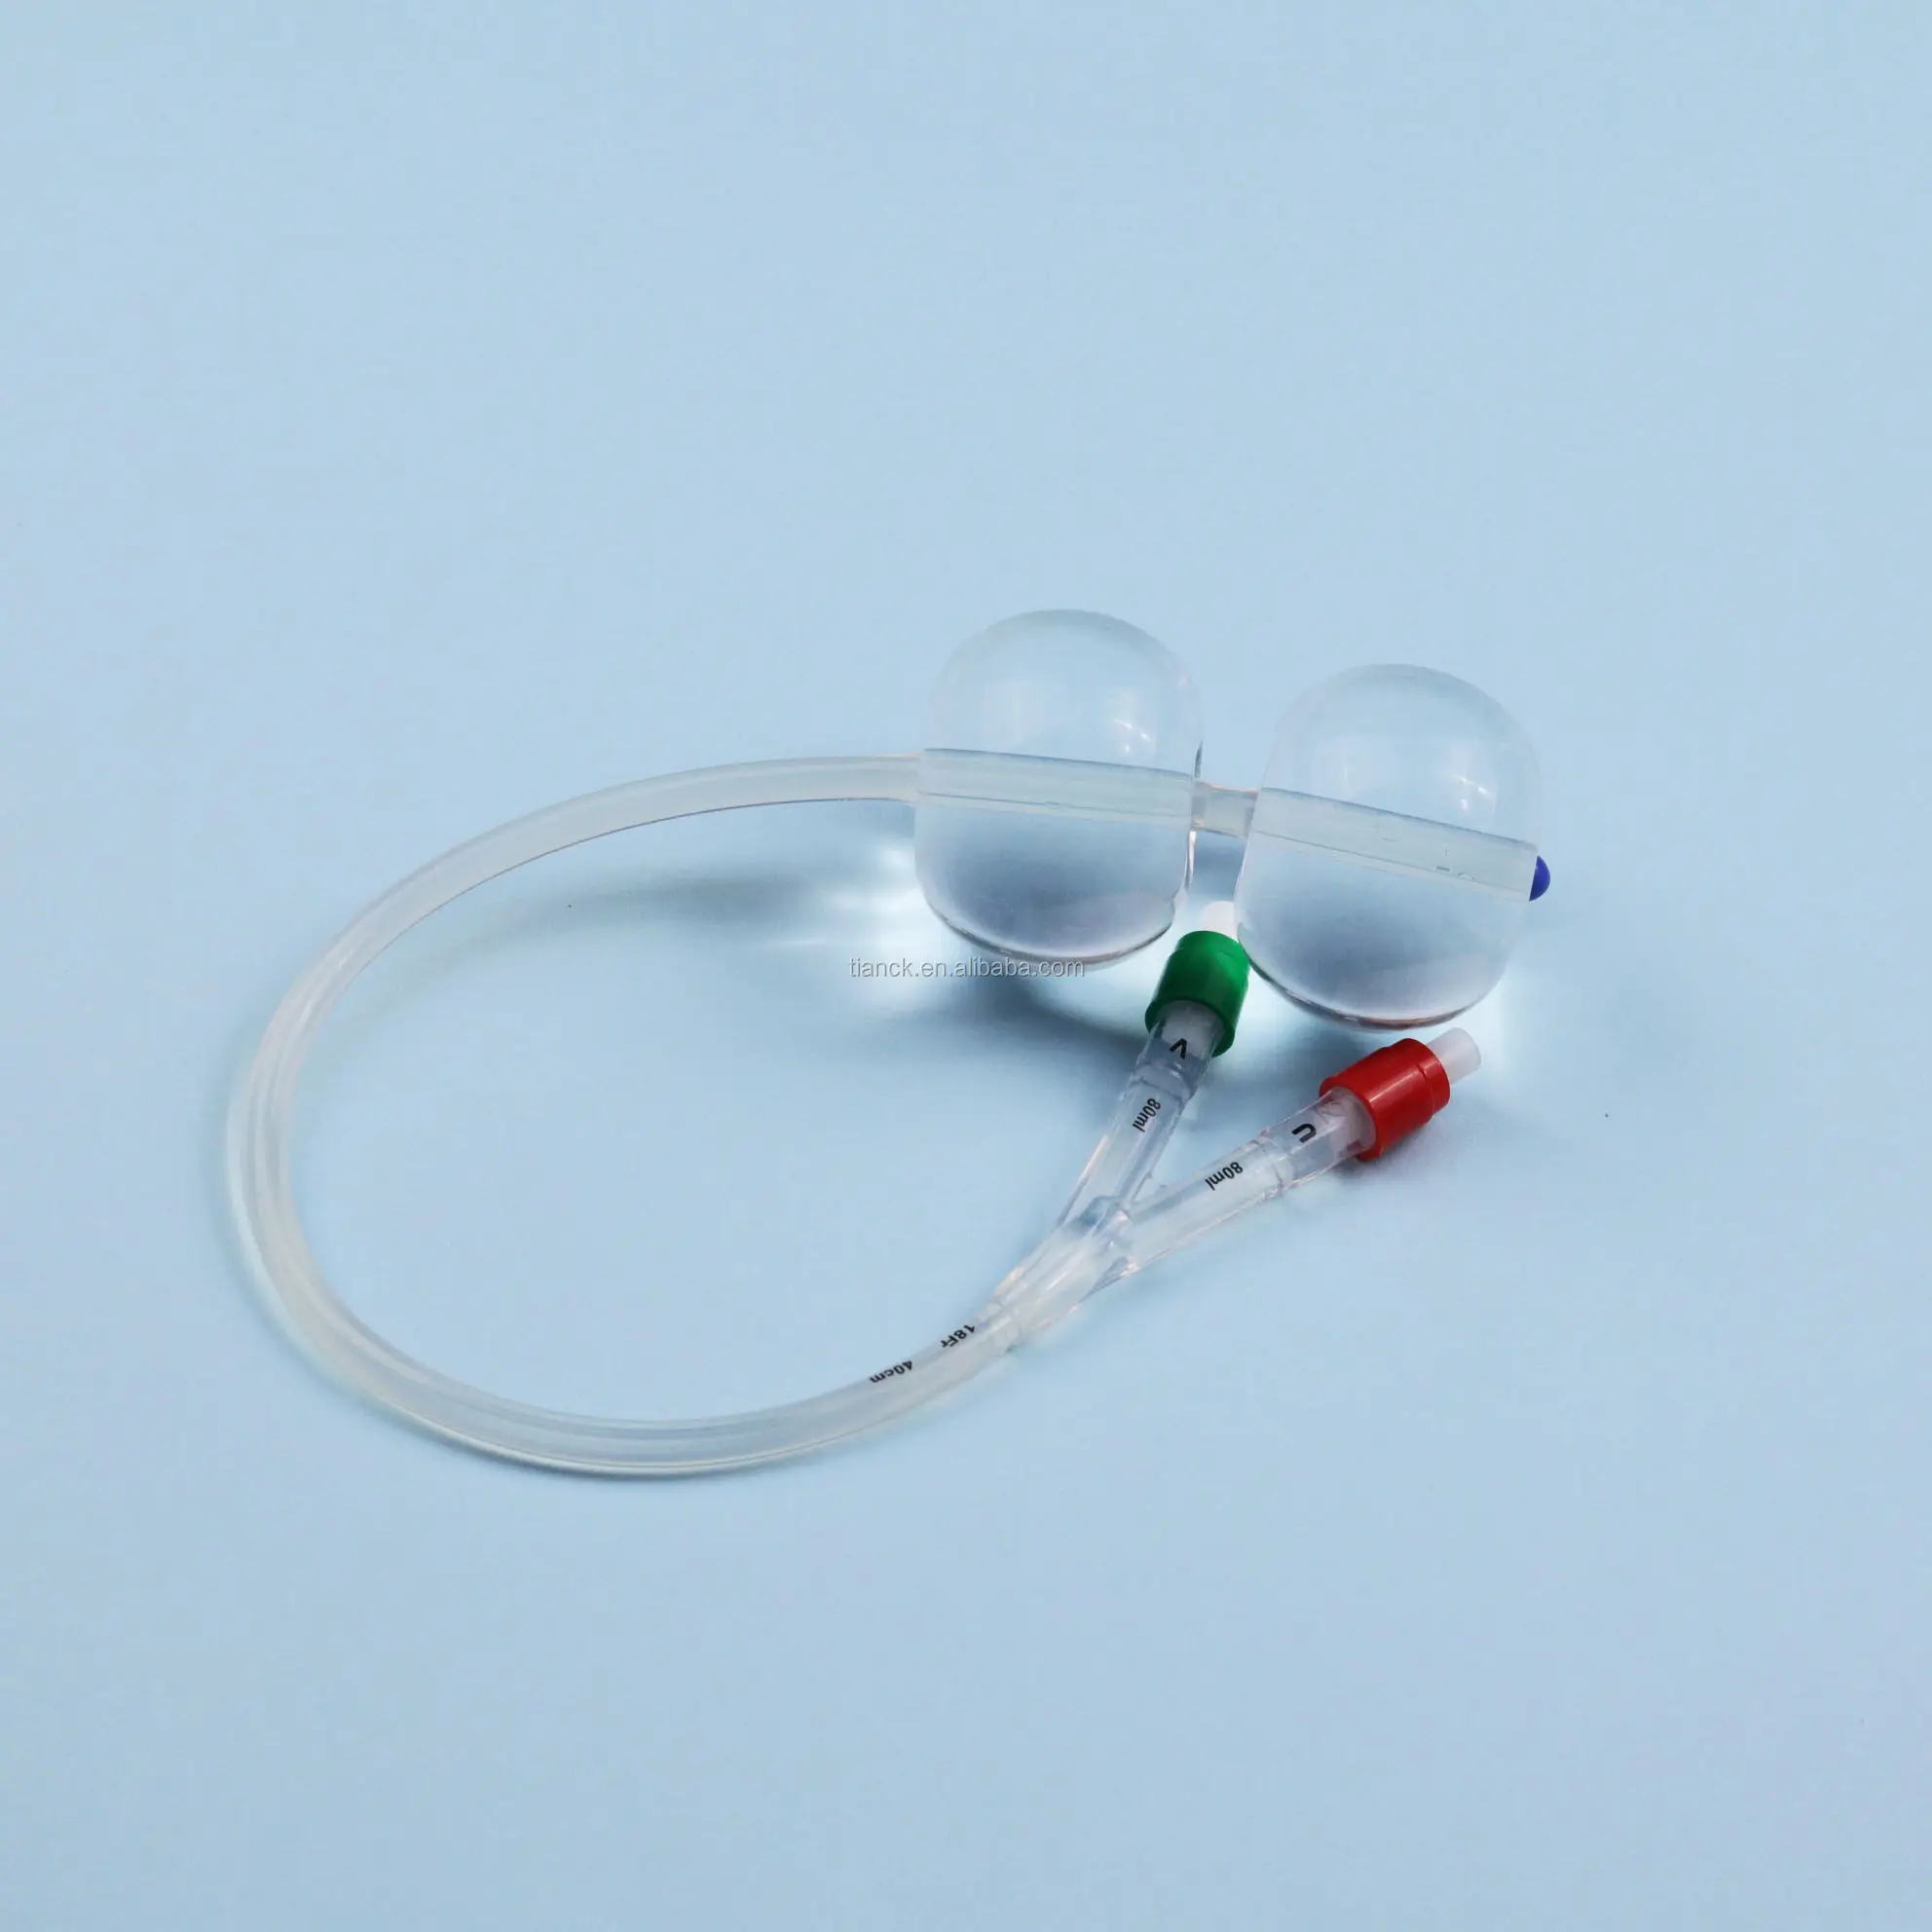 Tianck Medical supplies cervical ripening balloon